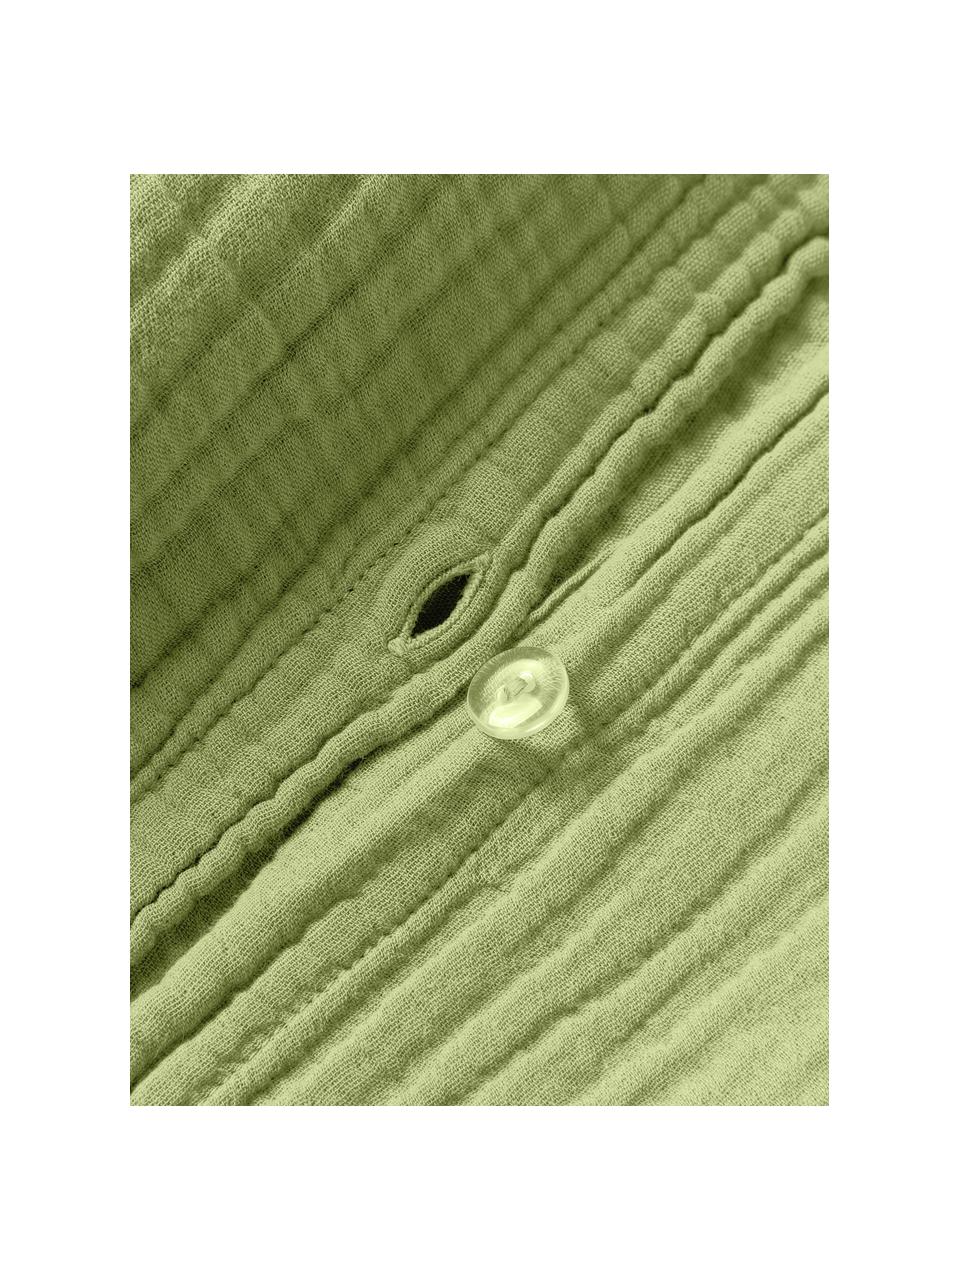 Musselin-Kopfkissenbezug Odile, Webart: Musselin Fadendichte 200 , Olivgrün, B 40 x L 80 cm